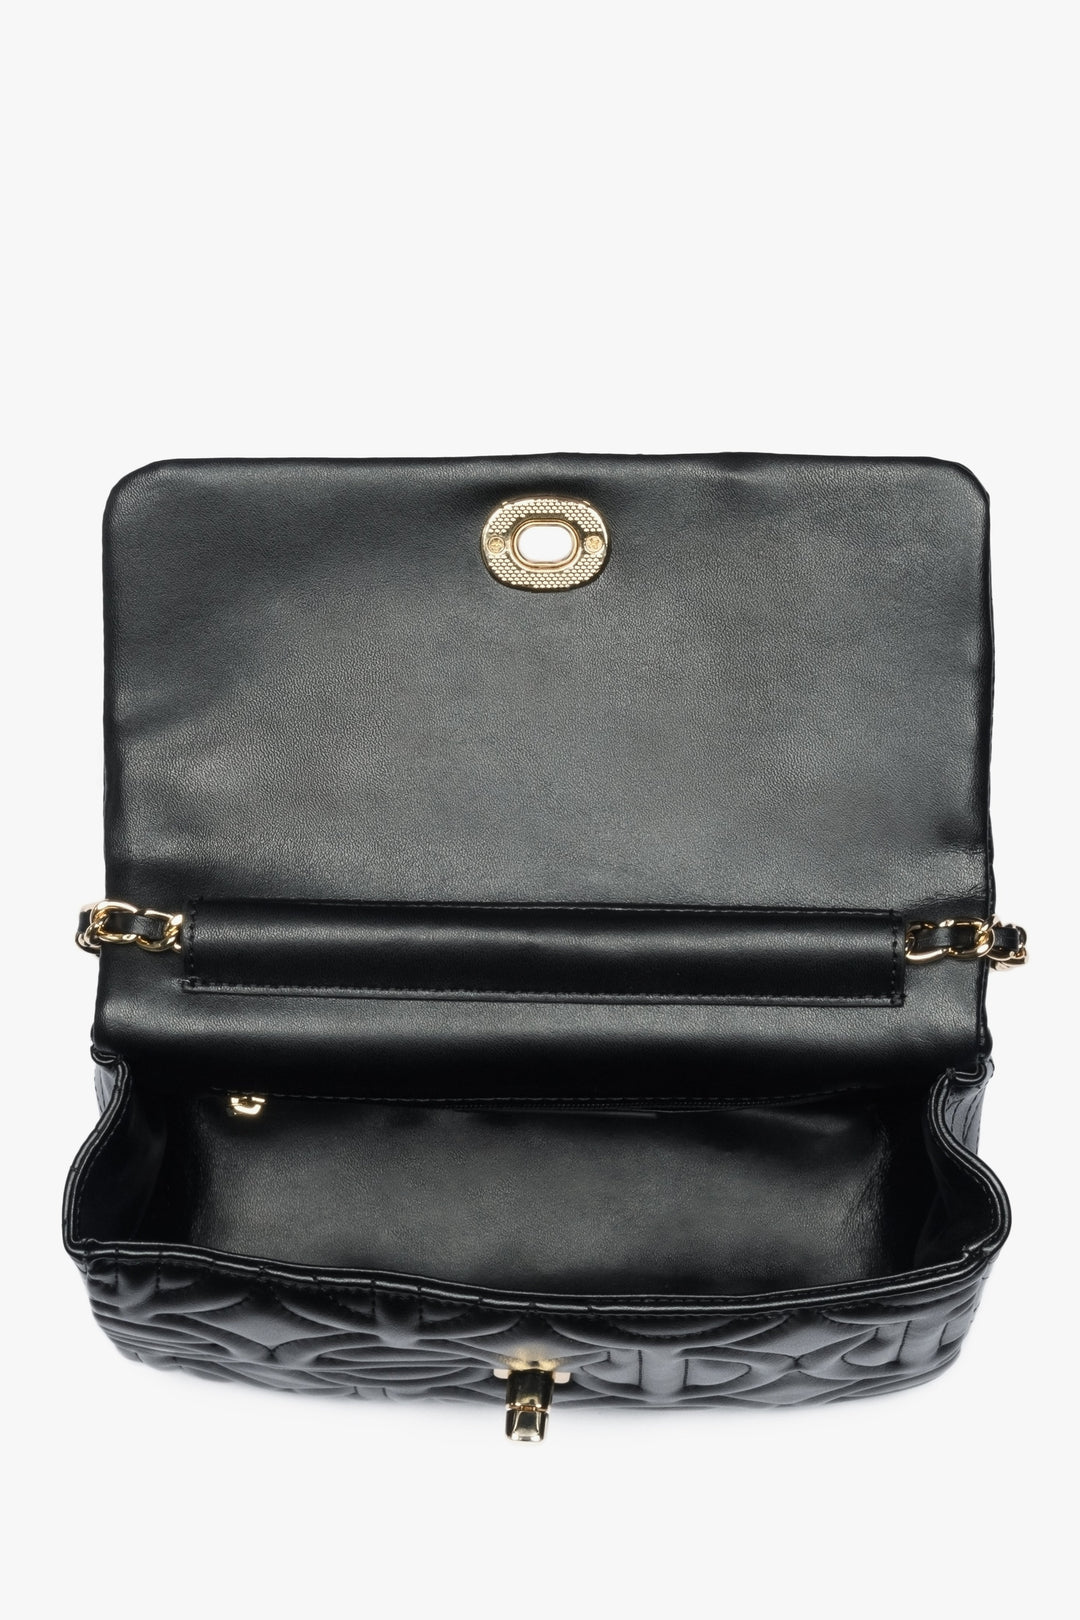 Stylish, women's black handbag Estro made of genuine leather - close-up on details.